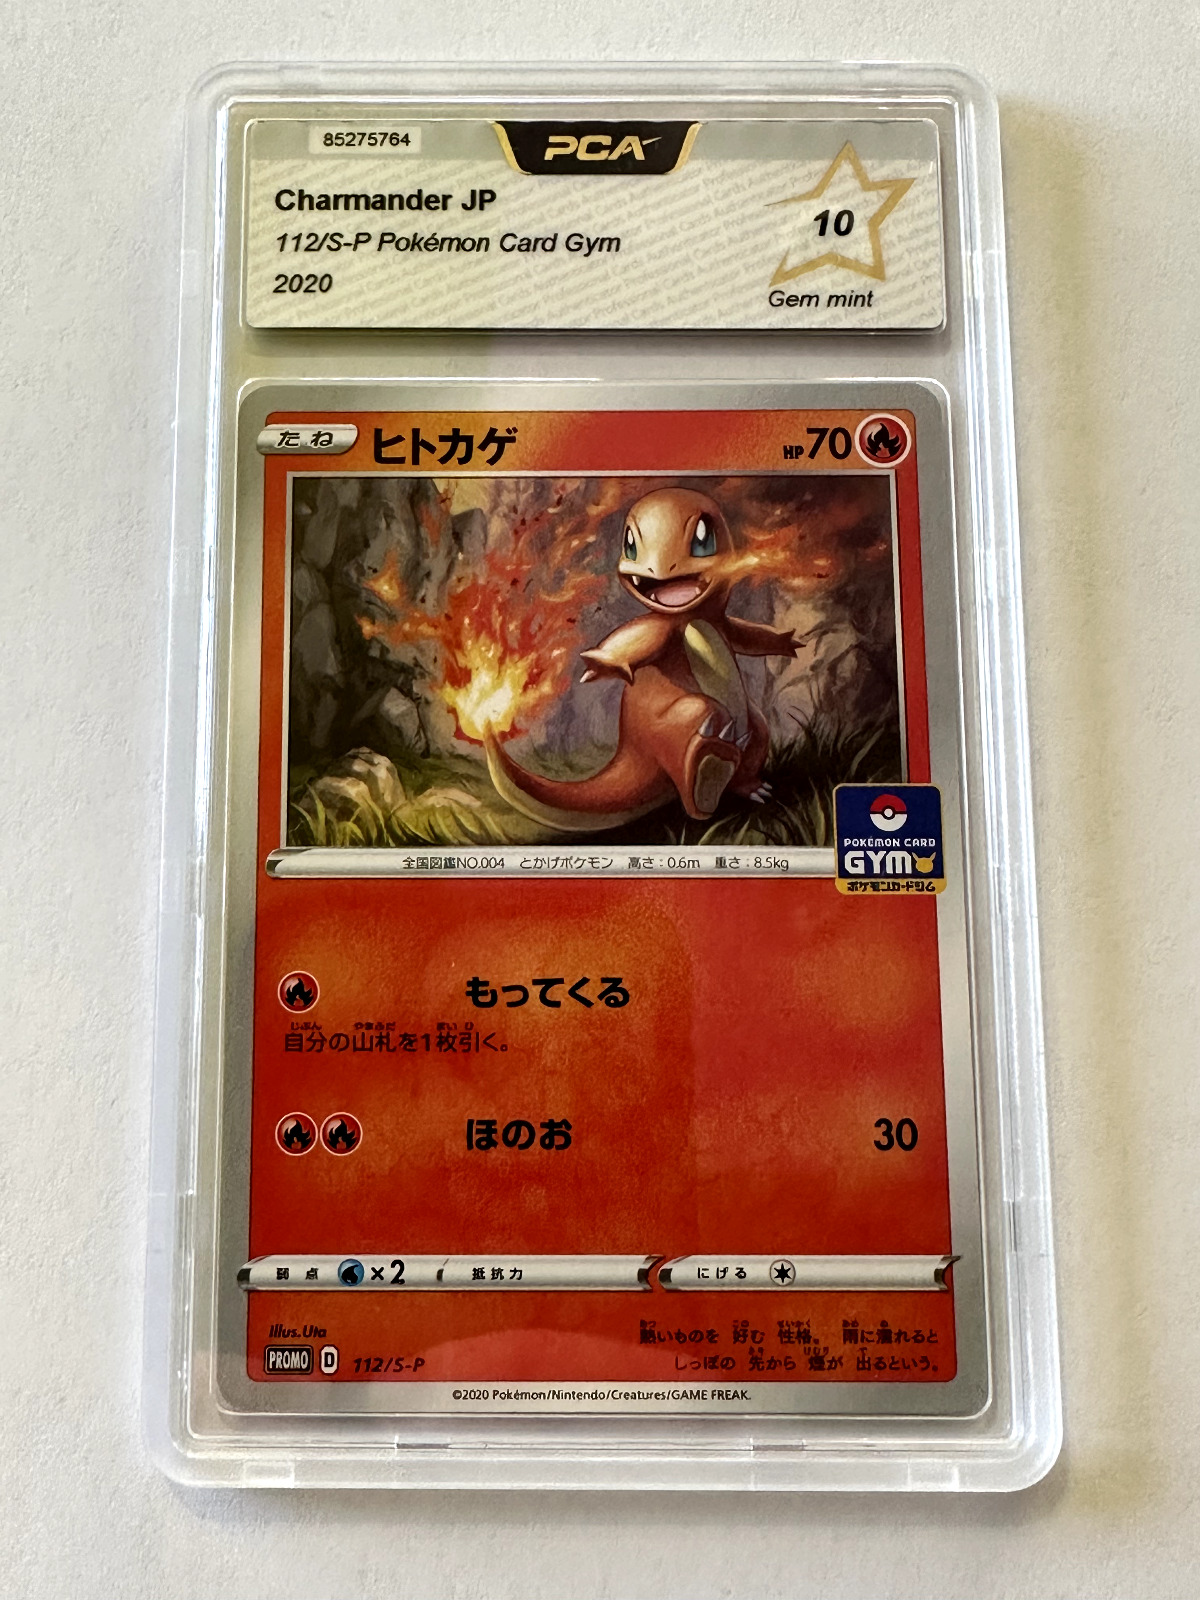 Pokemon Card - PCA 10 - Charmander JP - 112/S-P Pokemon Card Gym